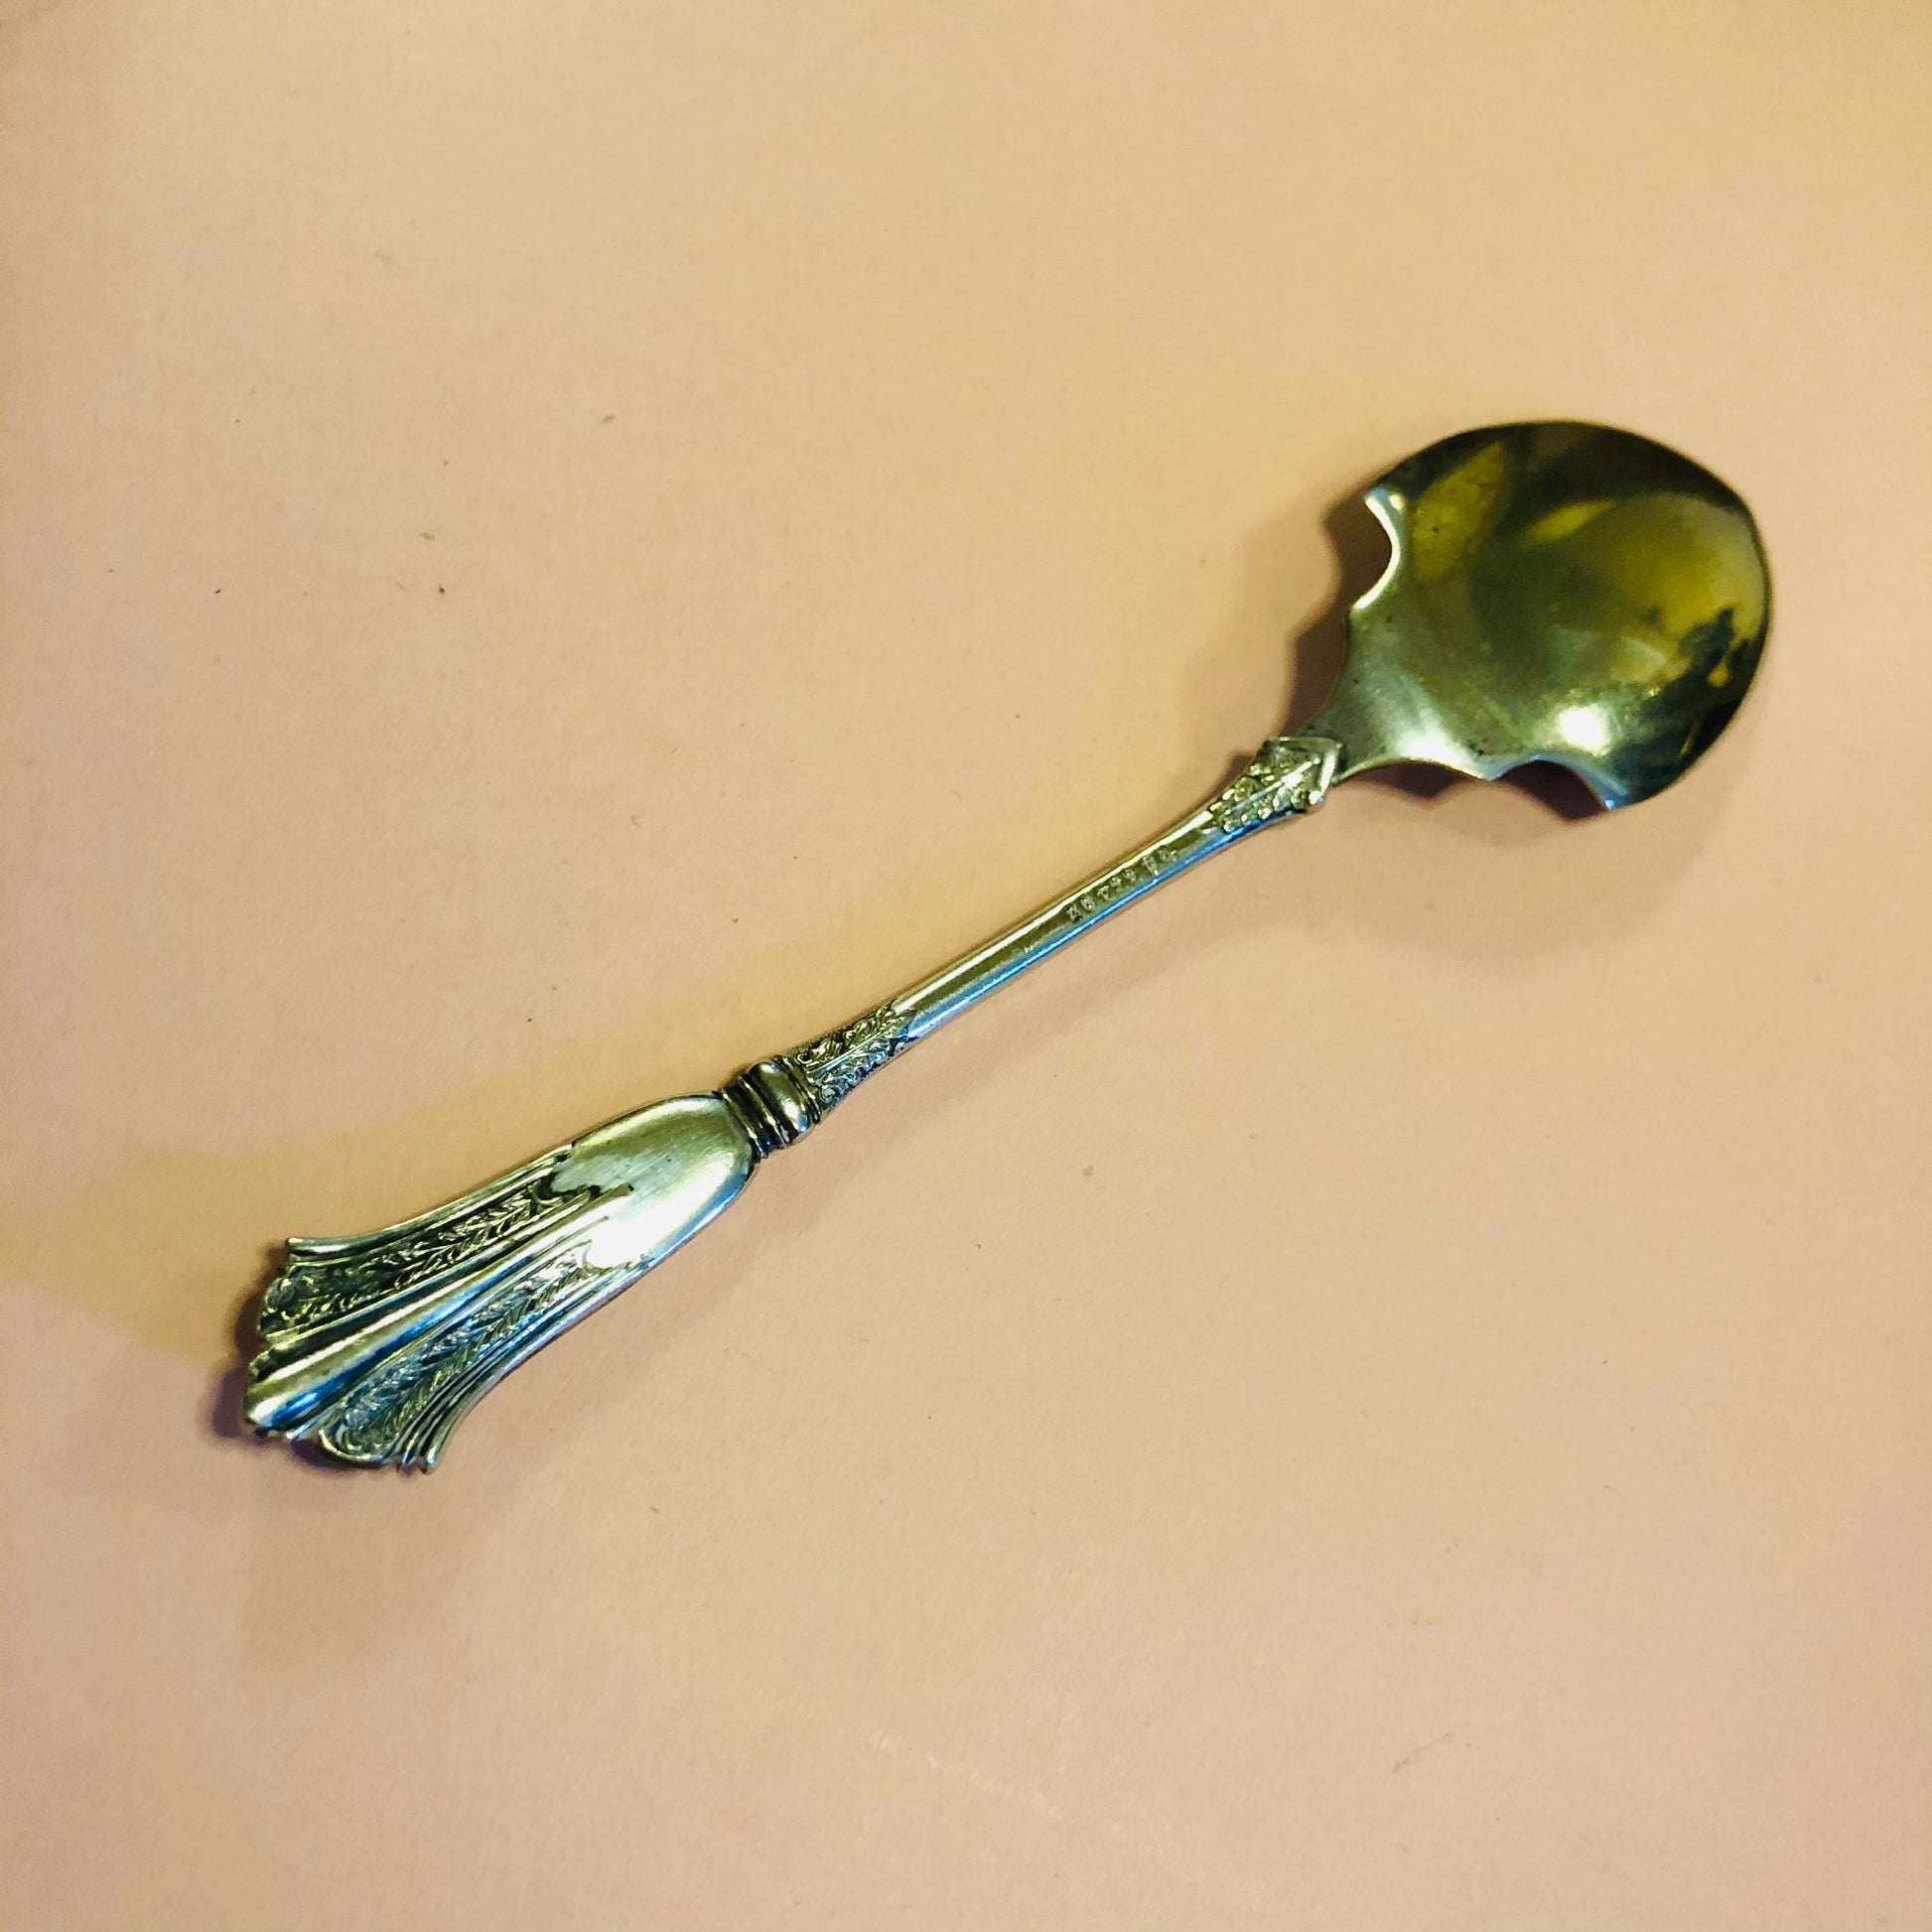 Antique Engraved Jam / Dessert Spoon